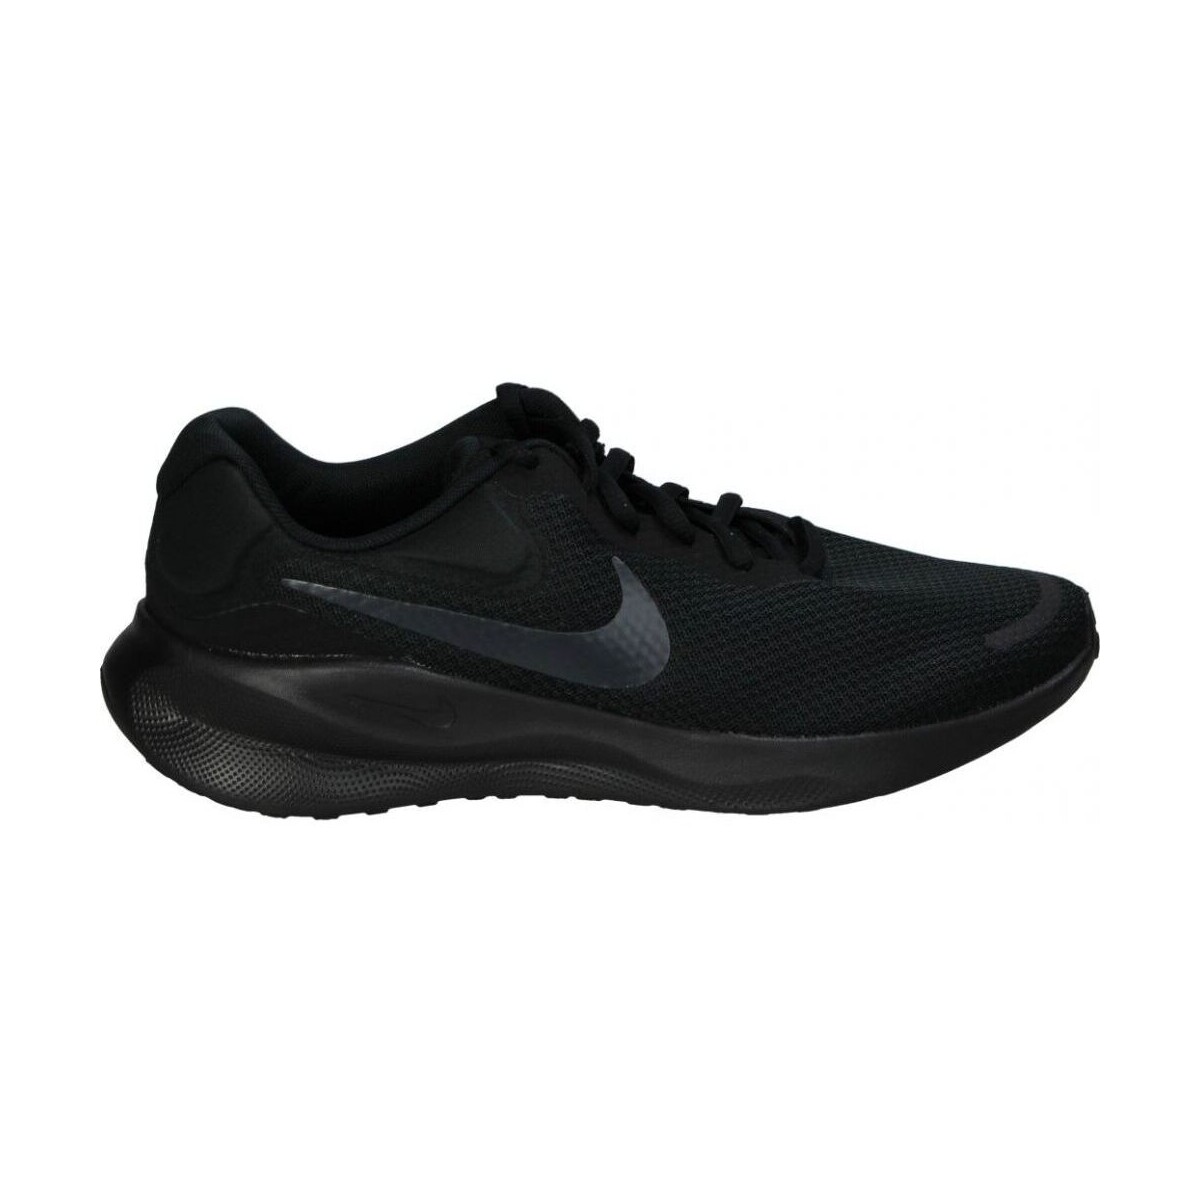 Chaussures de sport Nike FB2207 005 27449945 1200 A